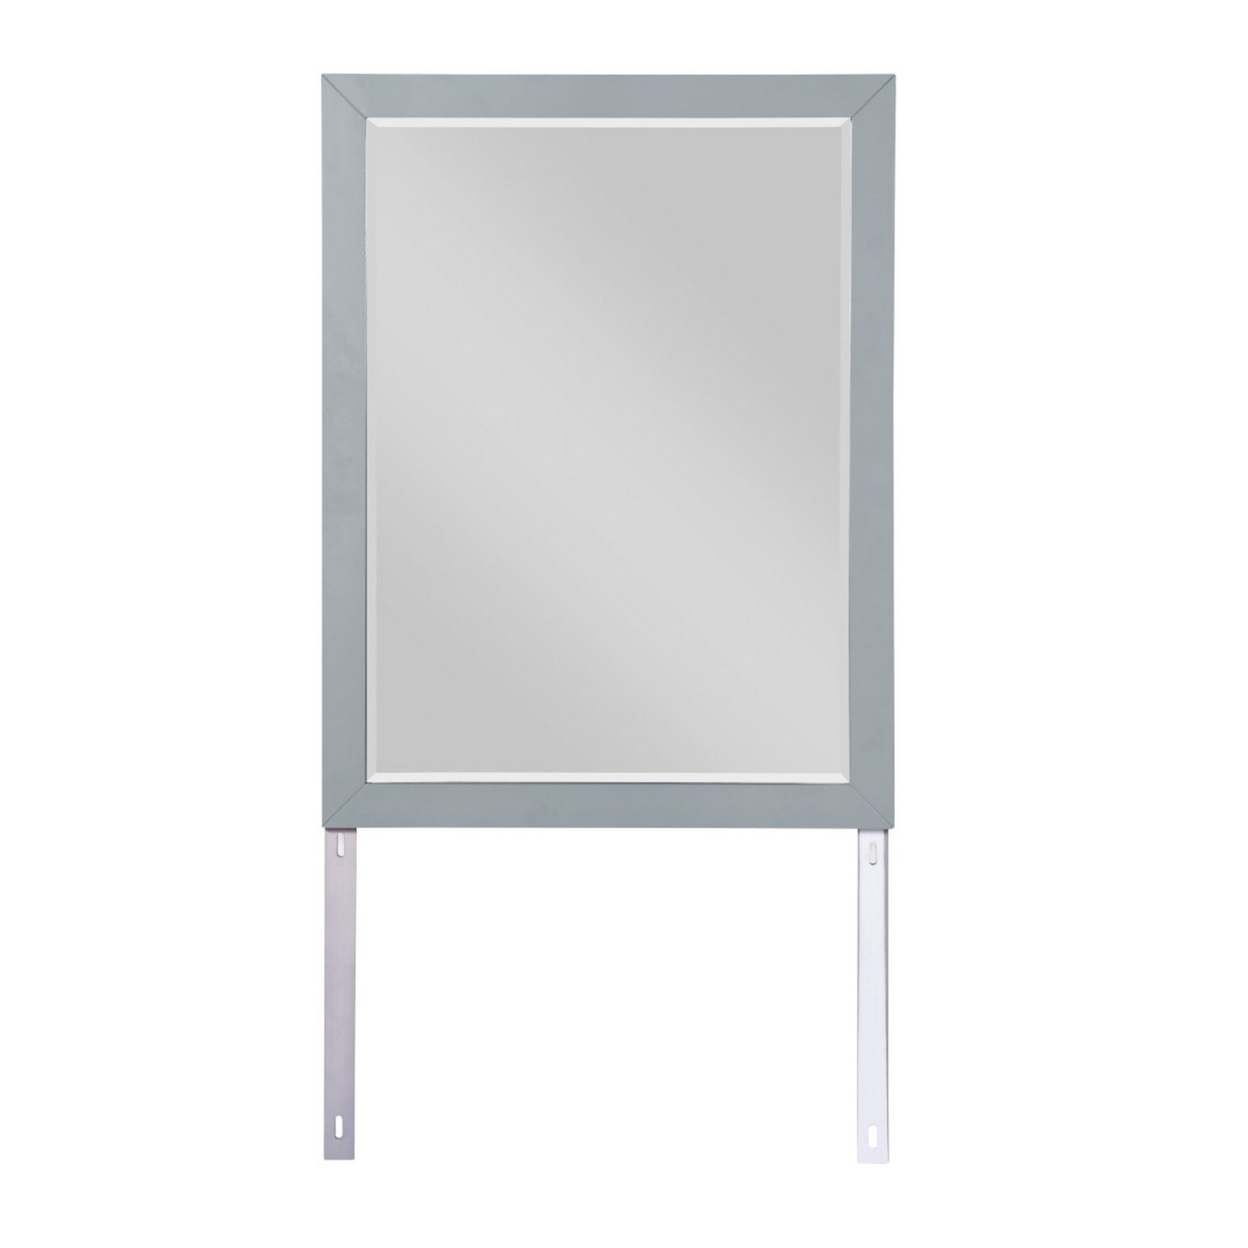 Transitional Style Wooden Frame Dresser Mirror With Mounting Bracket, Gray- Saltoro Sherpi